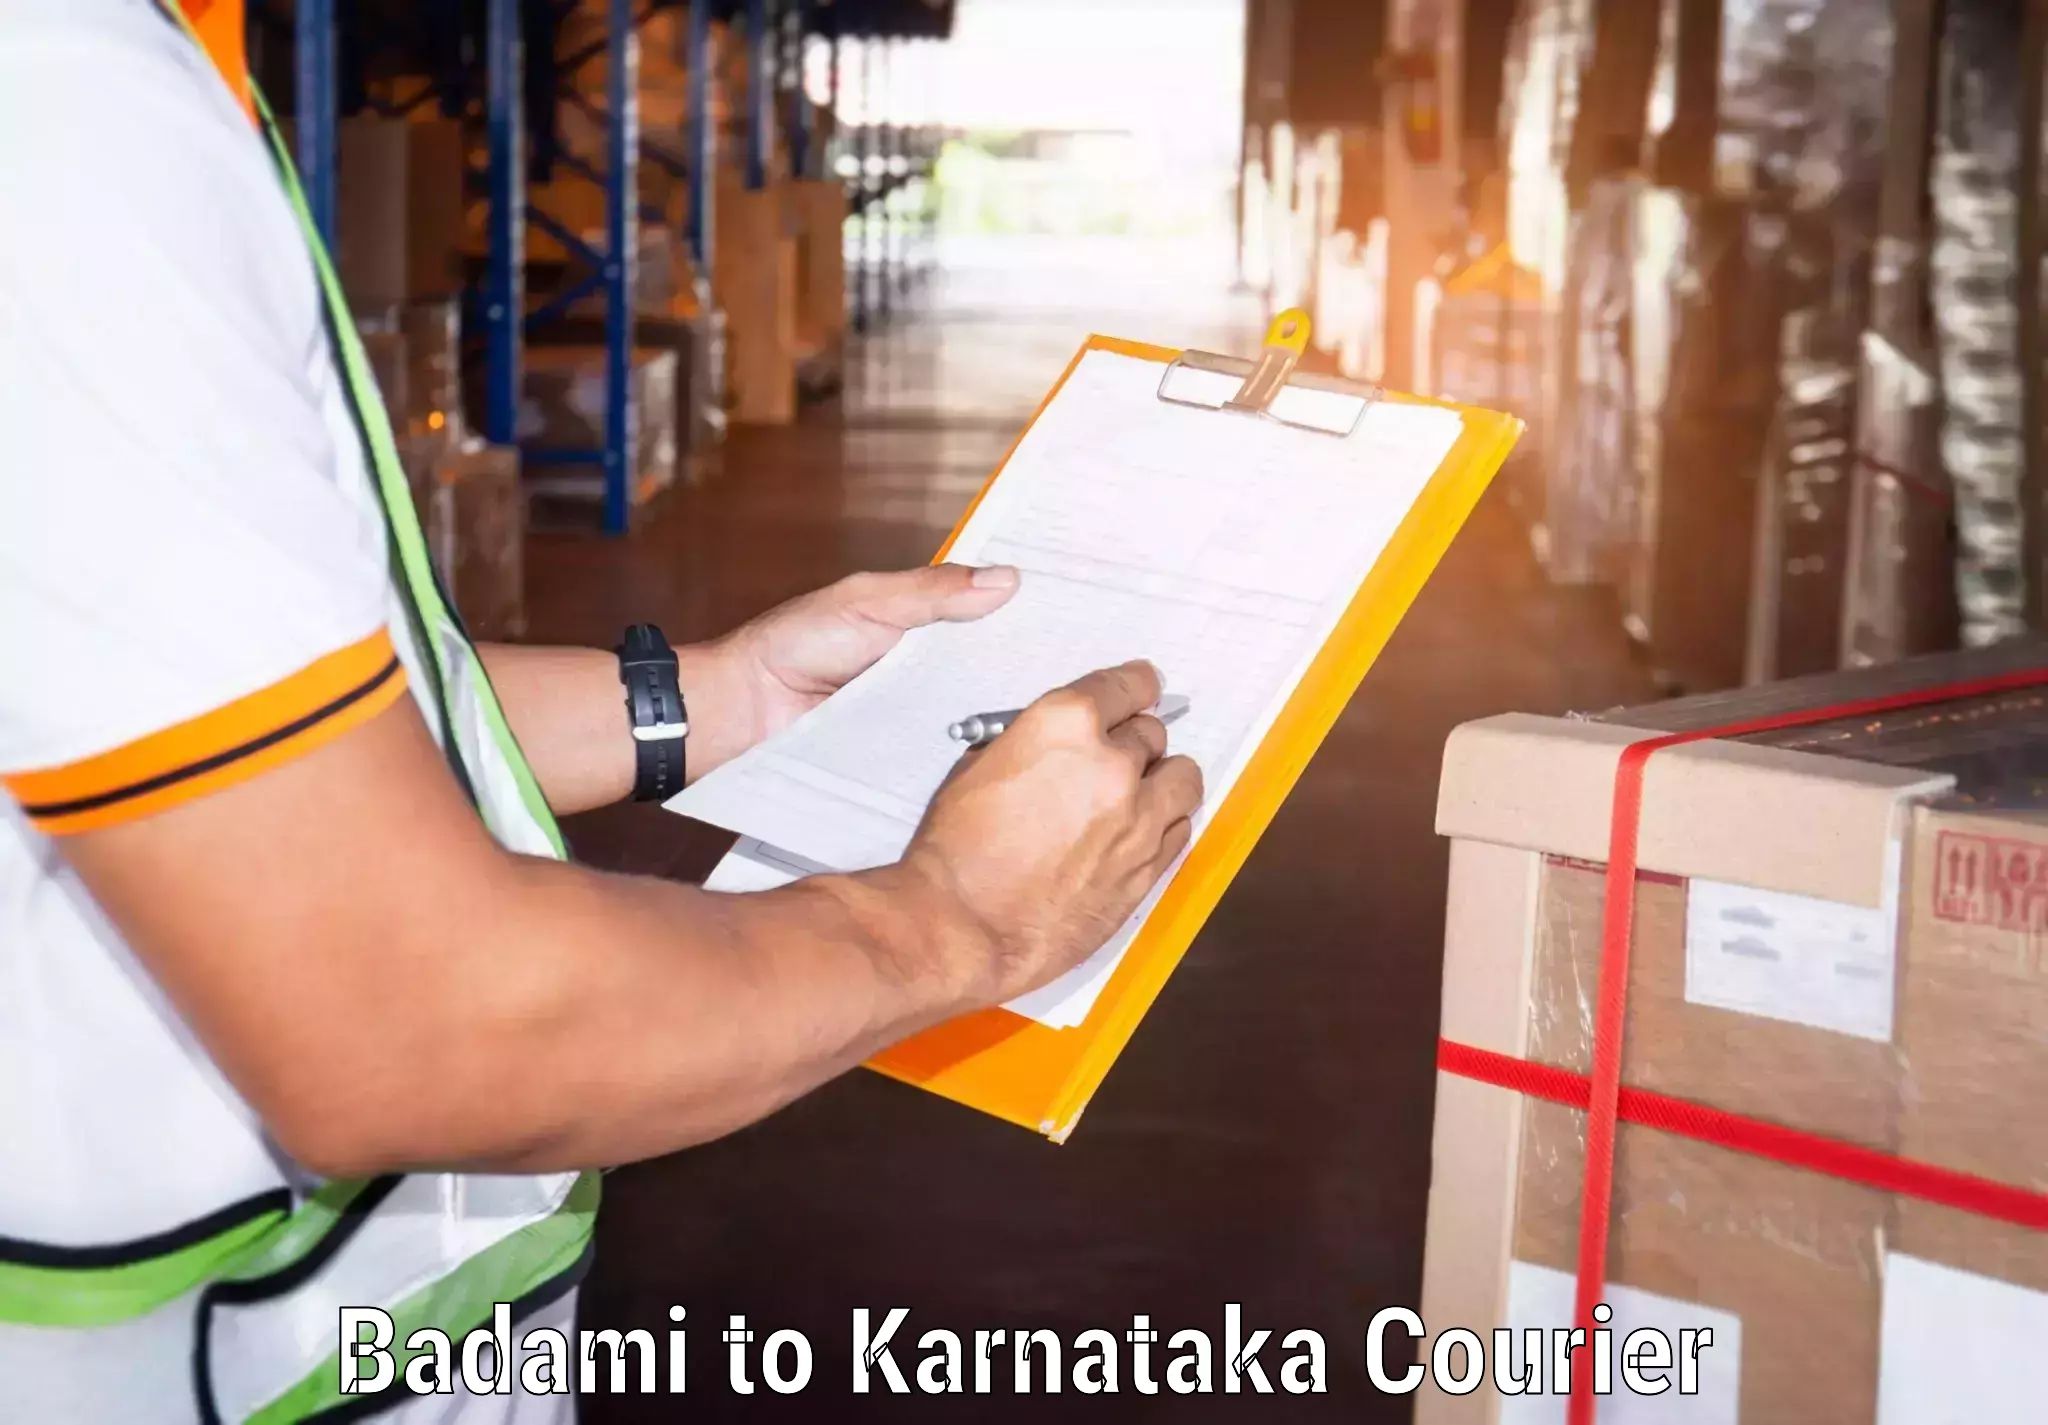 Professional courier handling Badami to Bangalore